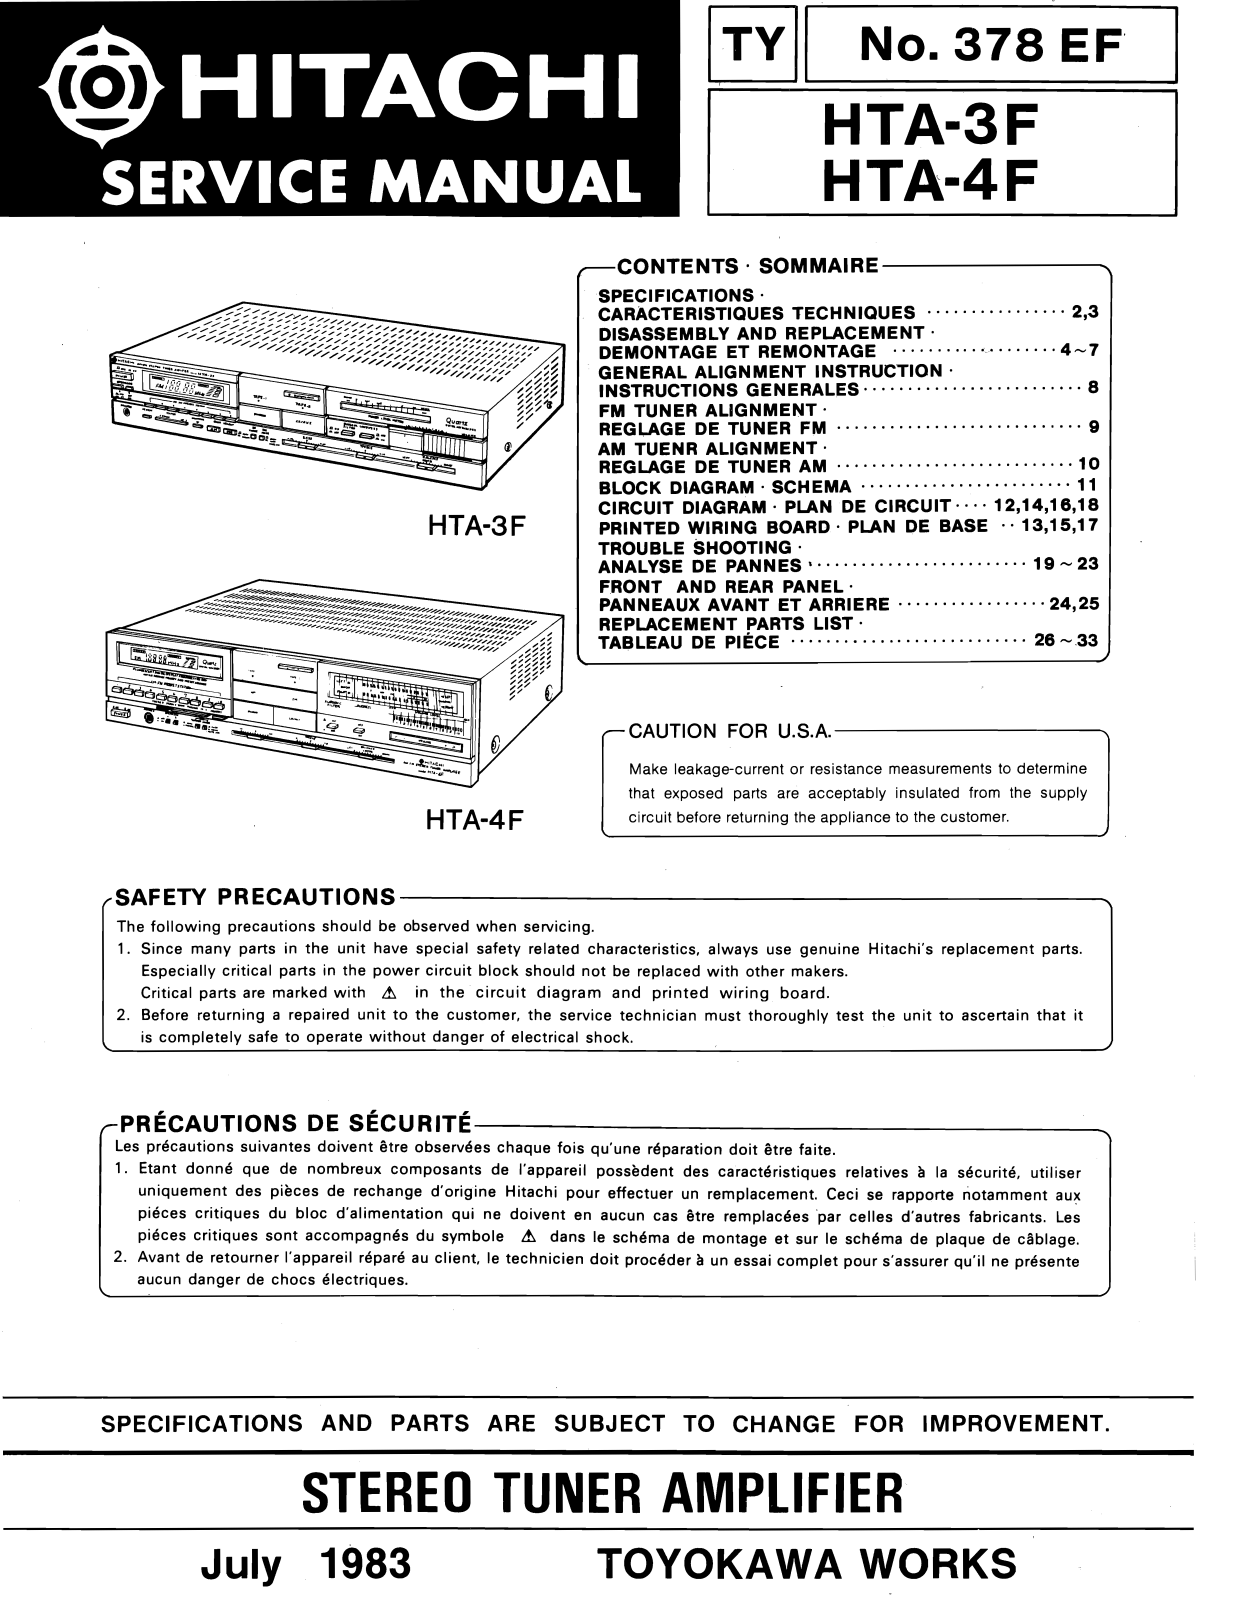 Hitachi HT-A3-F Service Manual